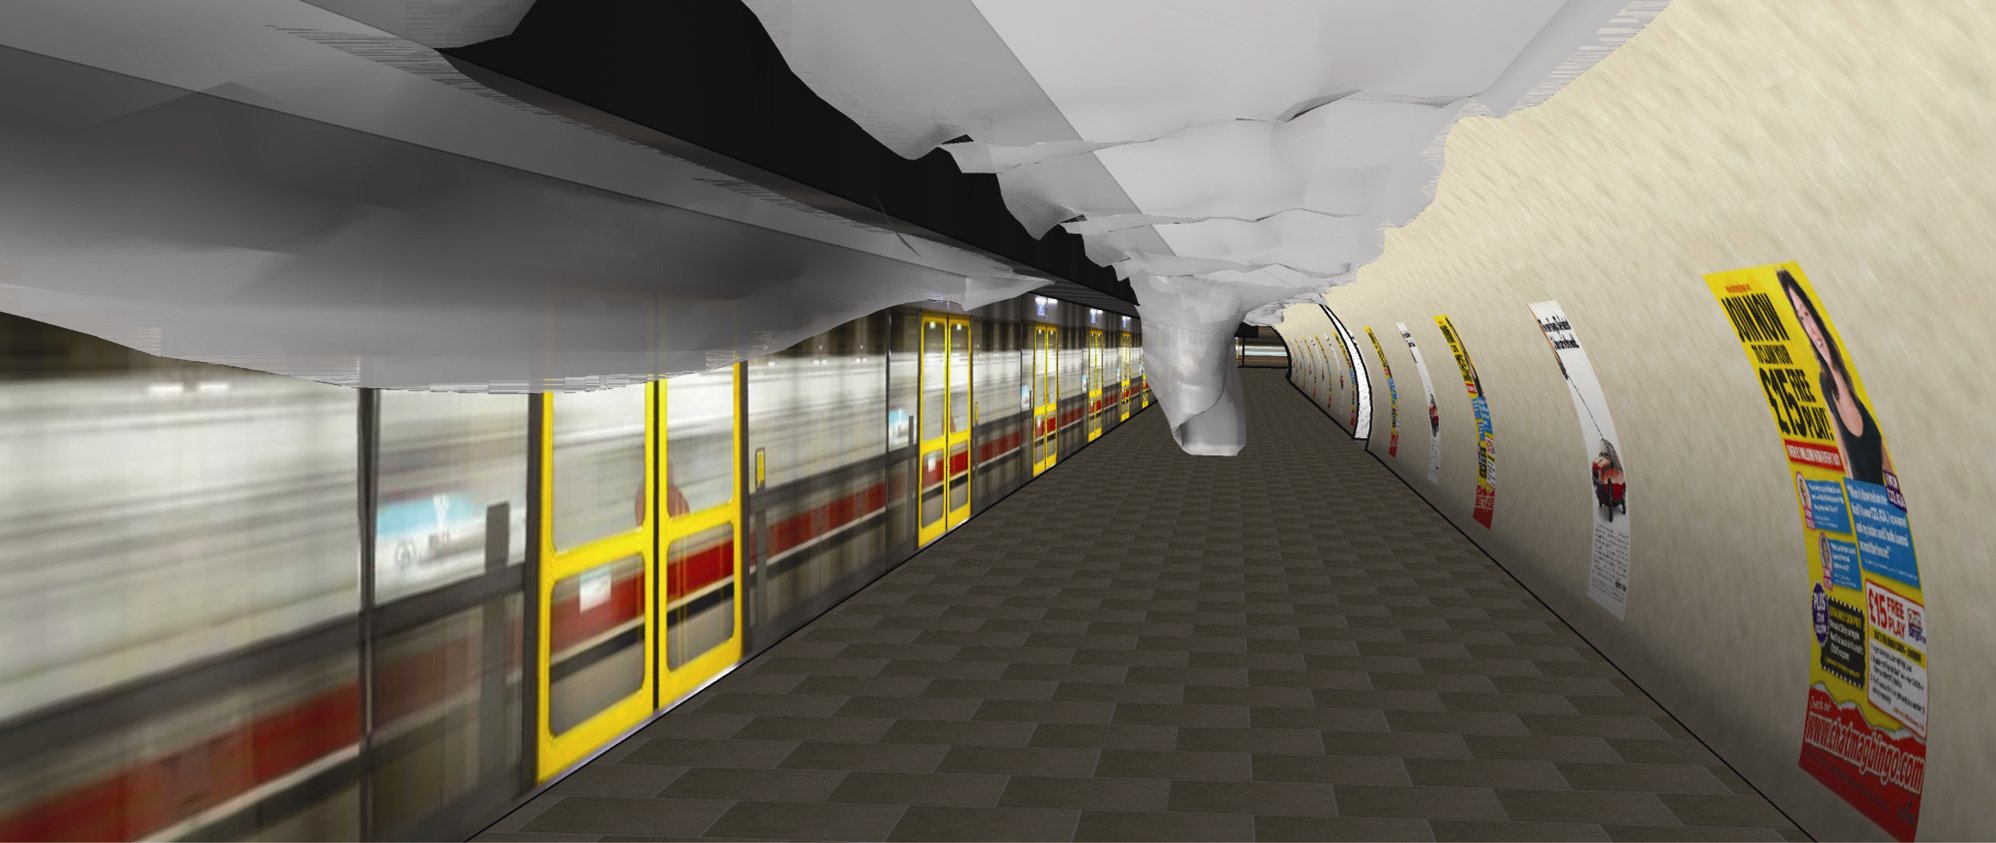 computer generated image of smoke movement on an underground train platform